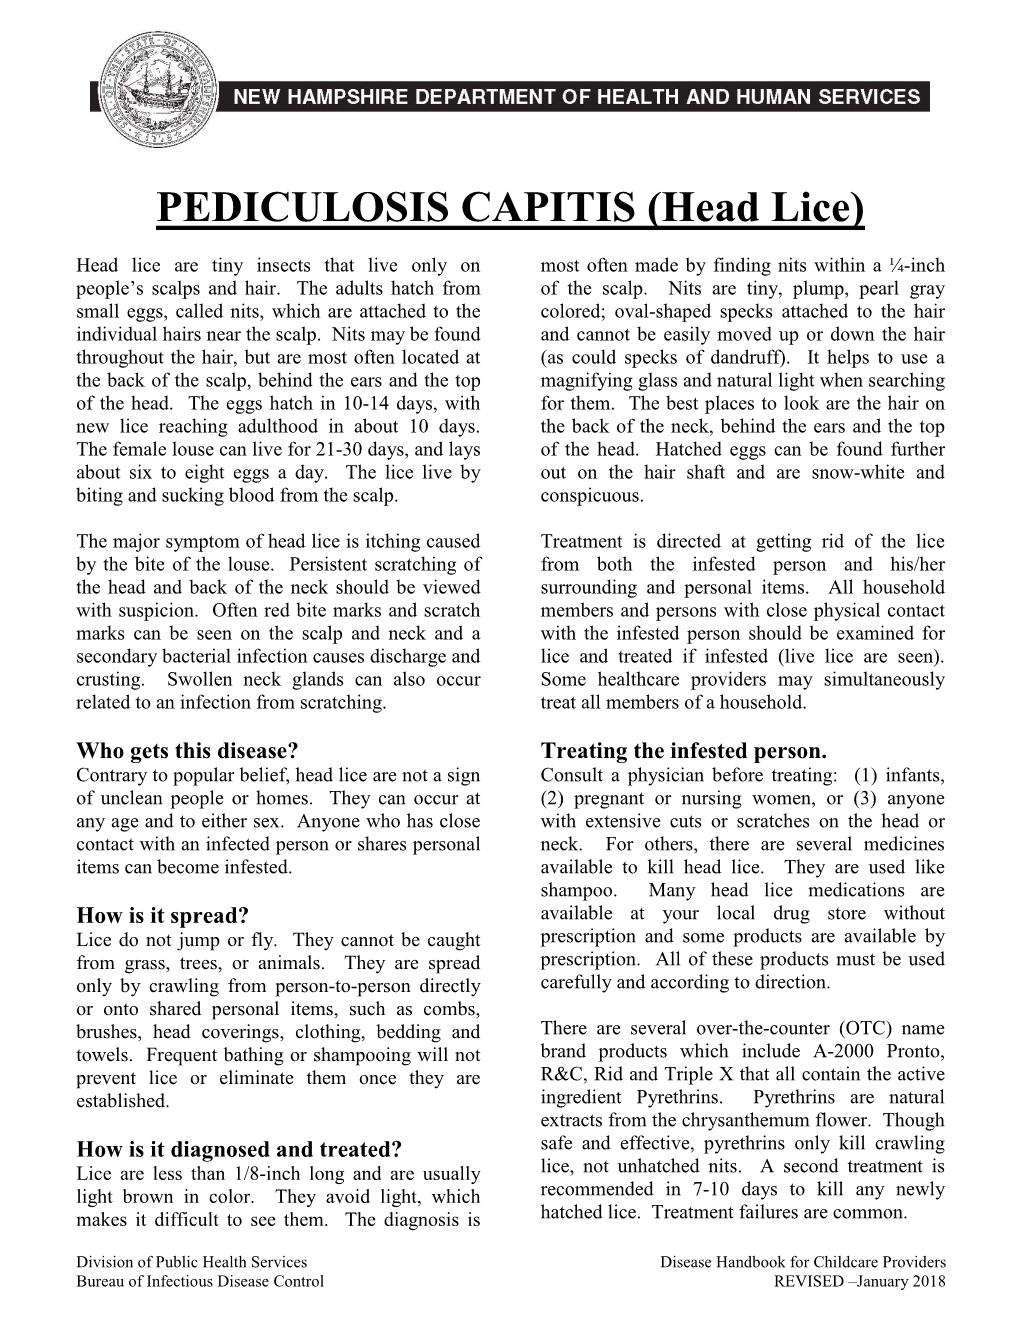 PEDICULOSIS CAPITIS (Head Lice) CONT